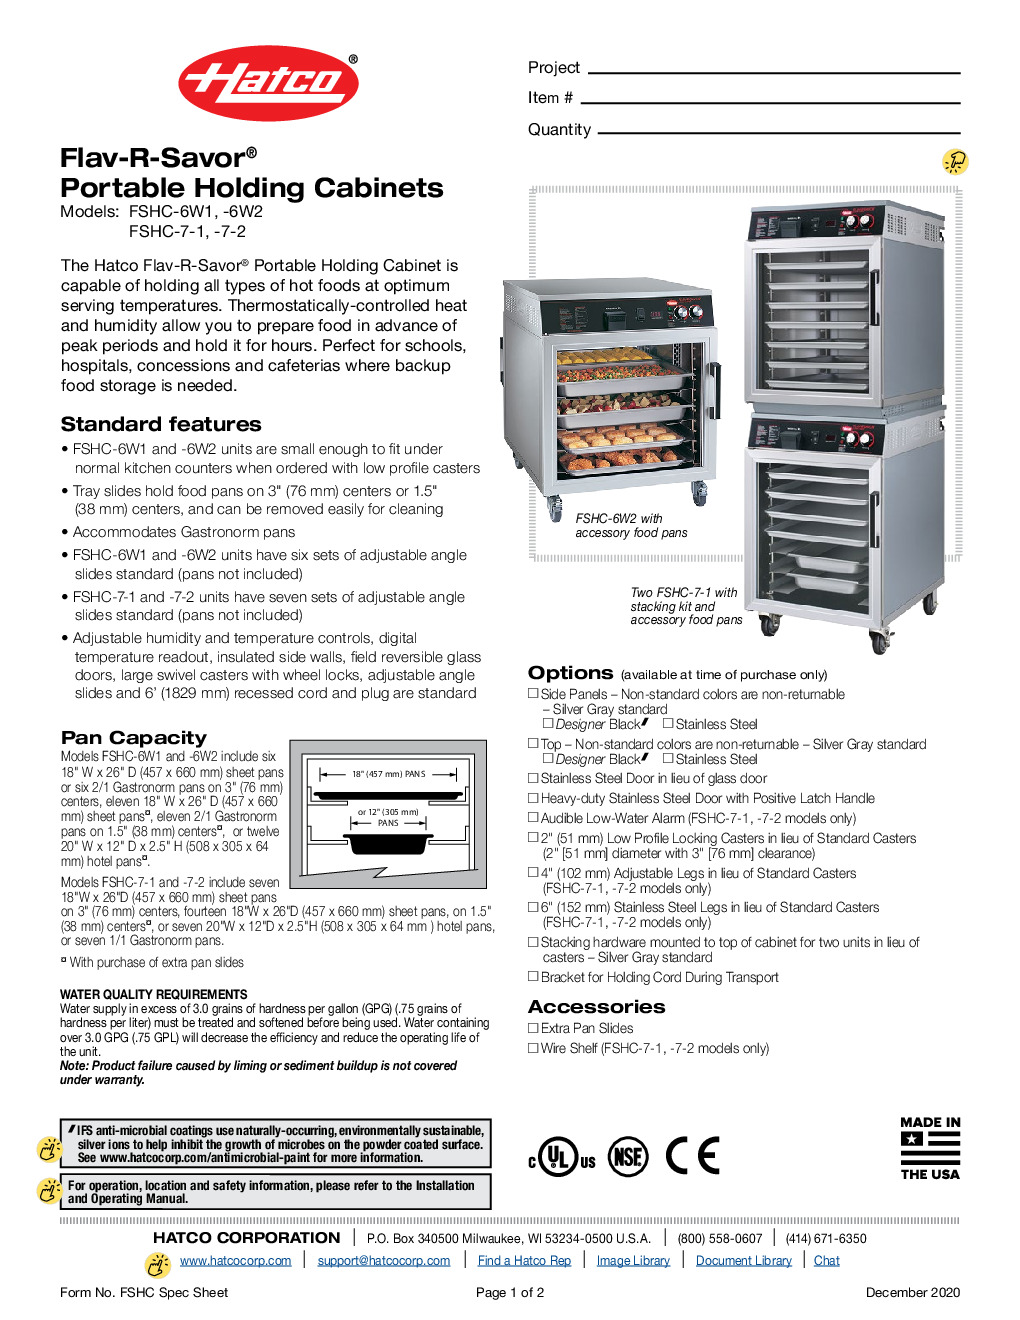 Hatco FSHC-7-2 Pass-Thru Mobile Heated Cabinet